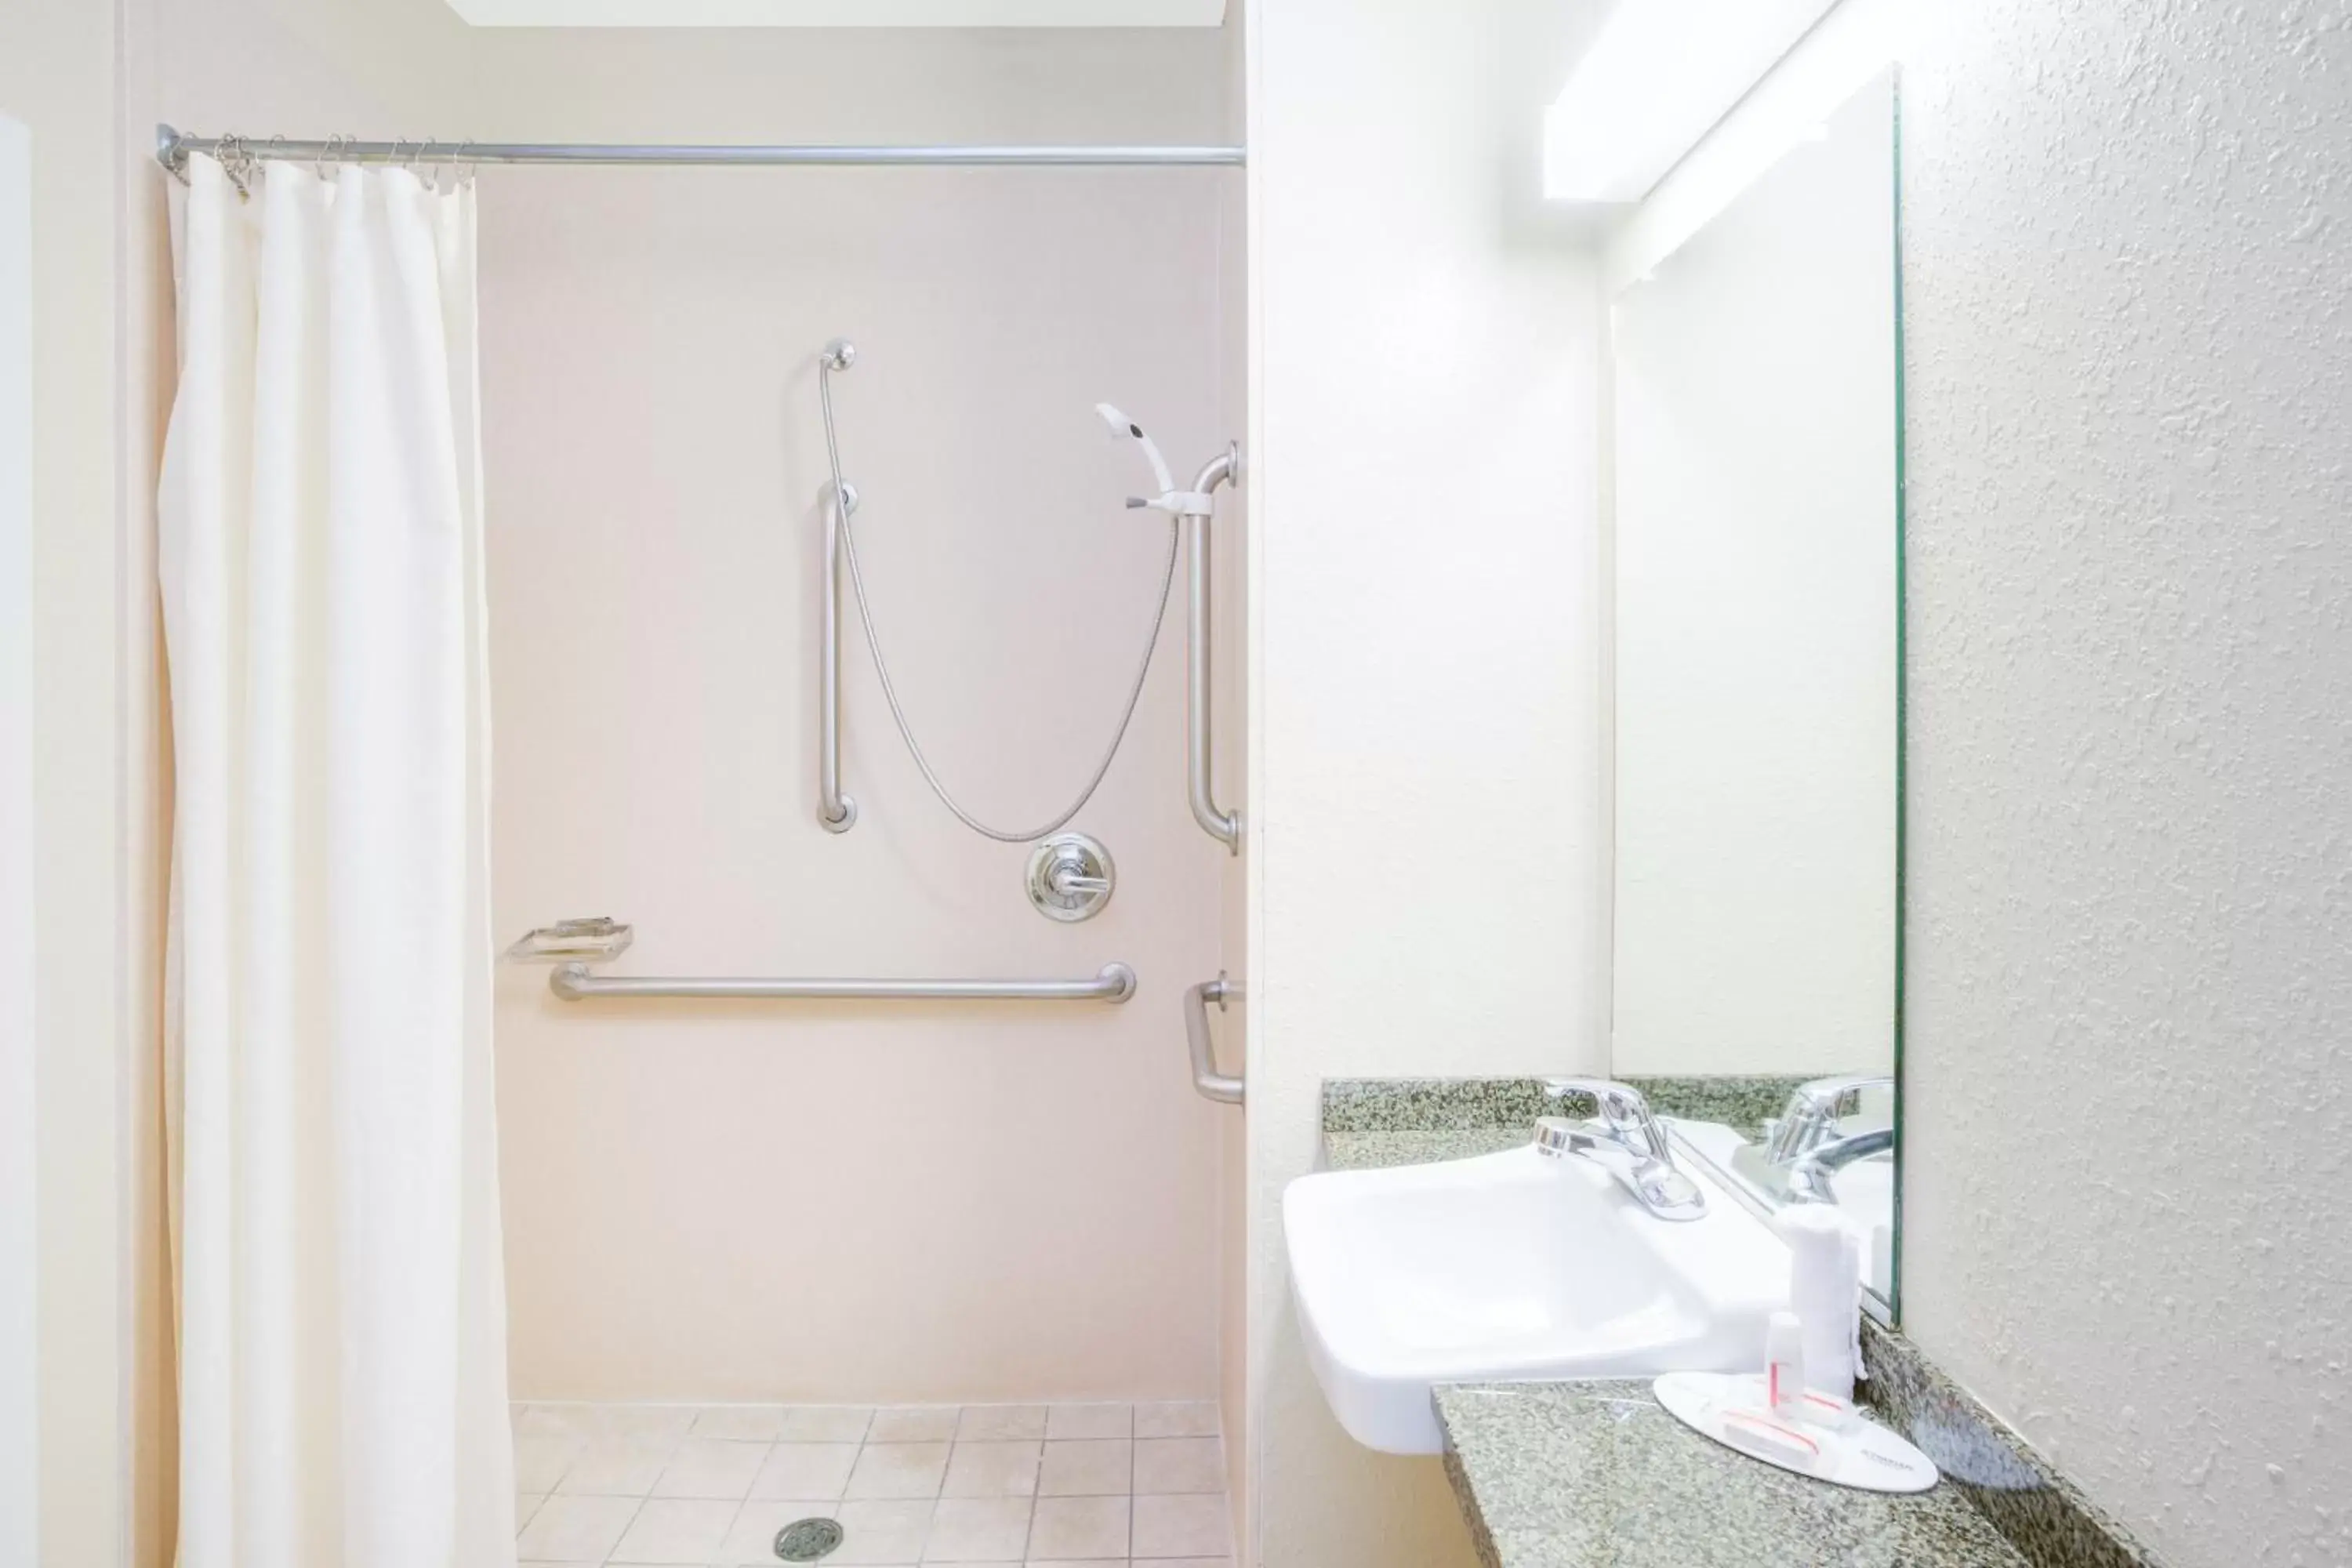 Shower, Bathroom in Microtel Inn & Suites by Wyndham Saraland